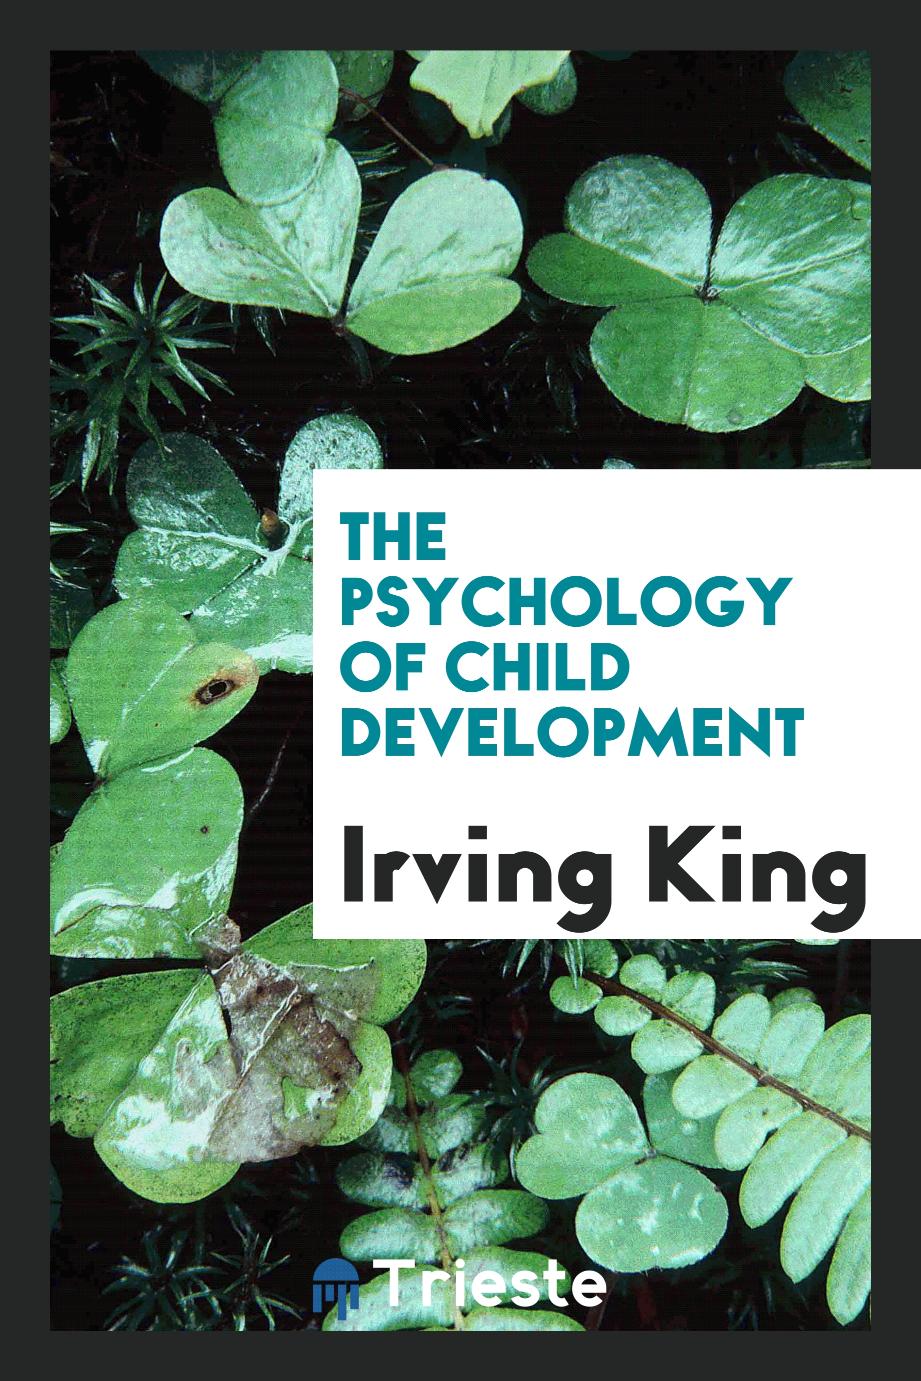 The psychology of child development